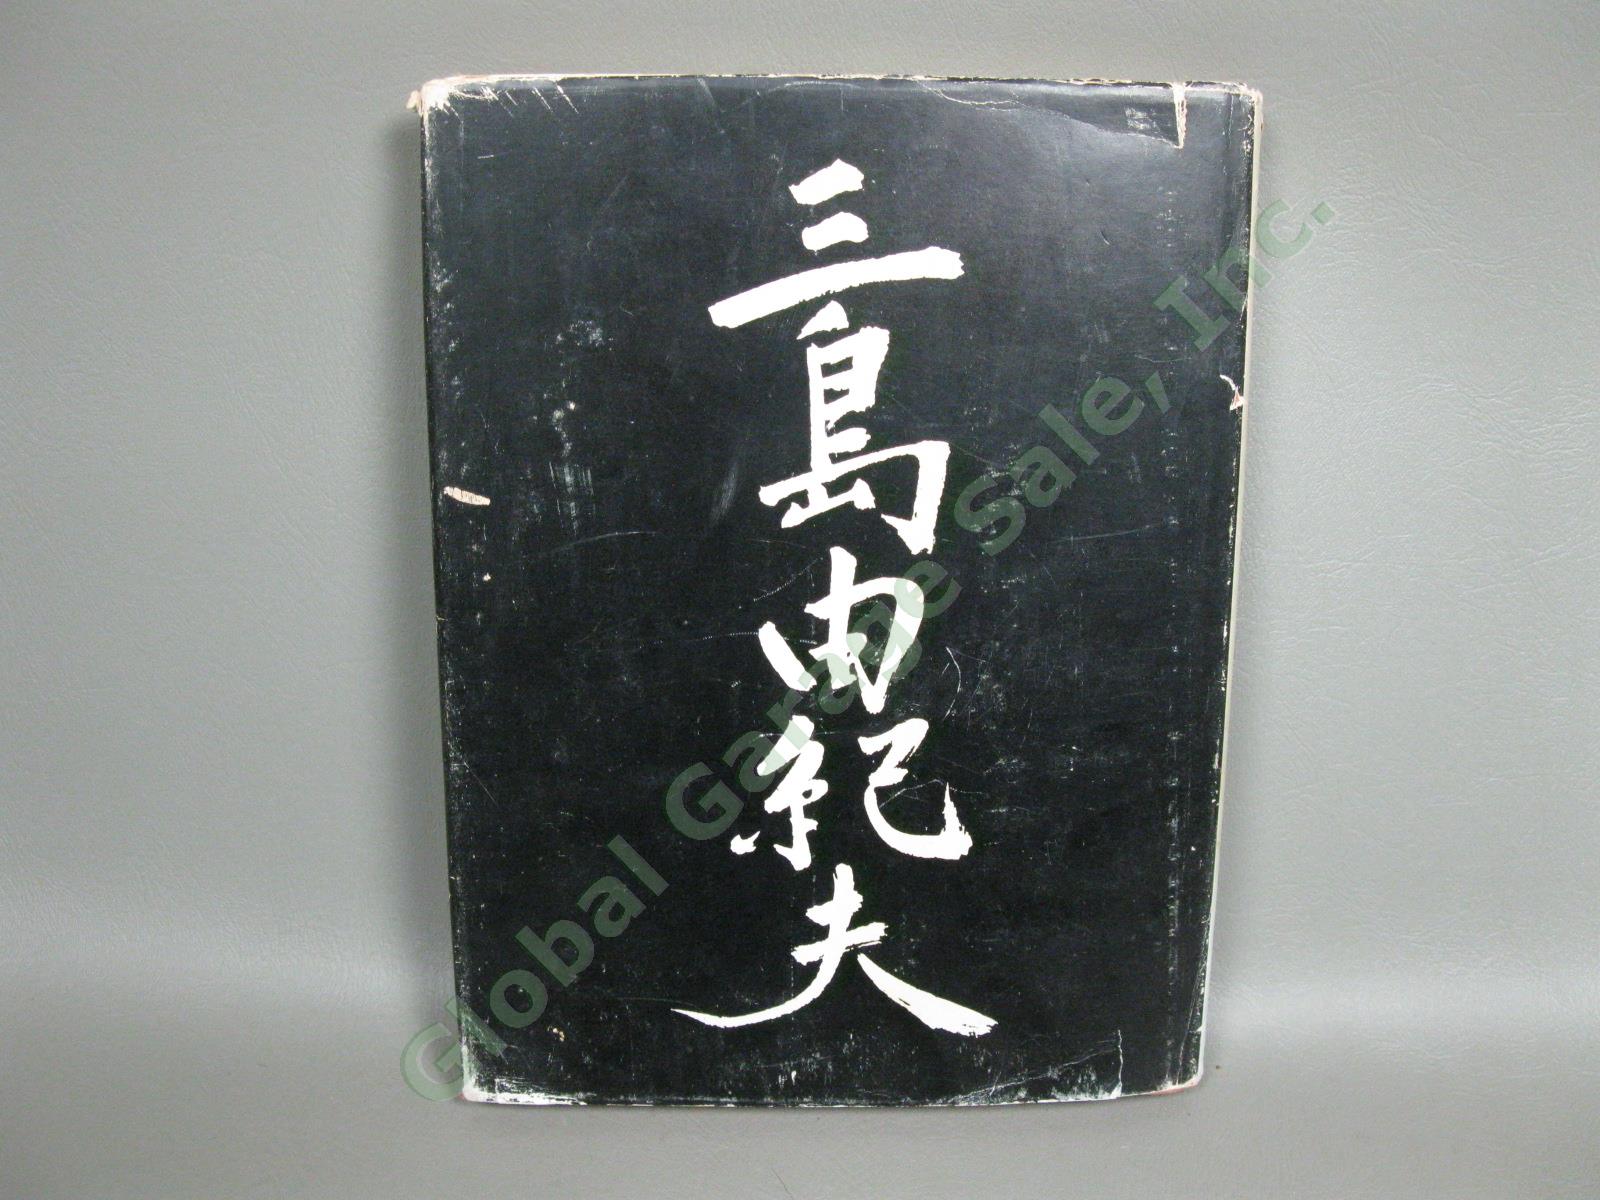 Sun & Steel Book 1ST EDITION Yukio Mishima Translated John Bester Hardcover 1970 1